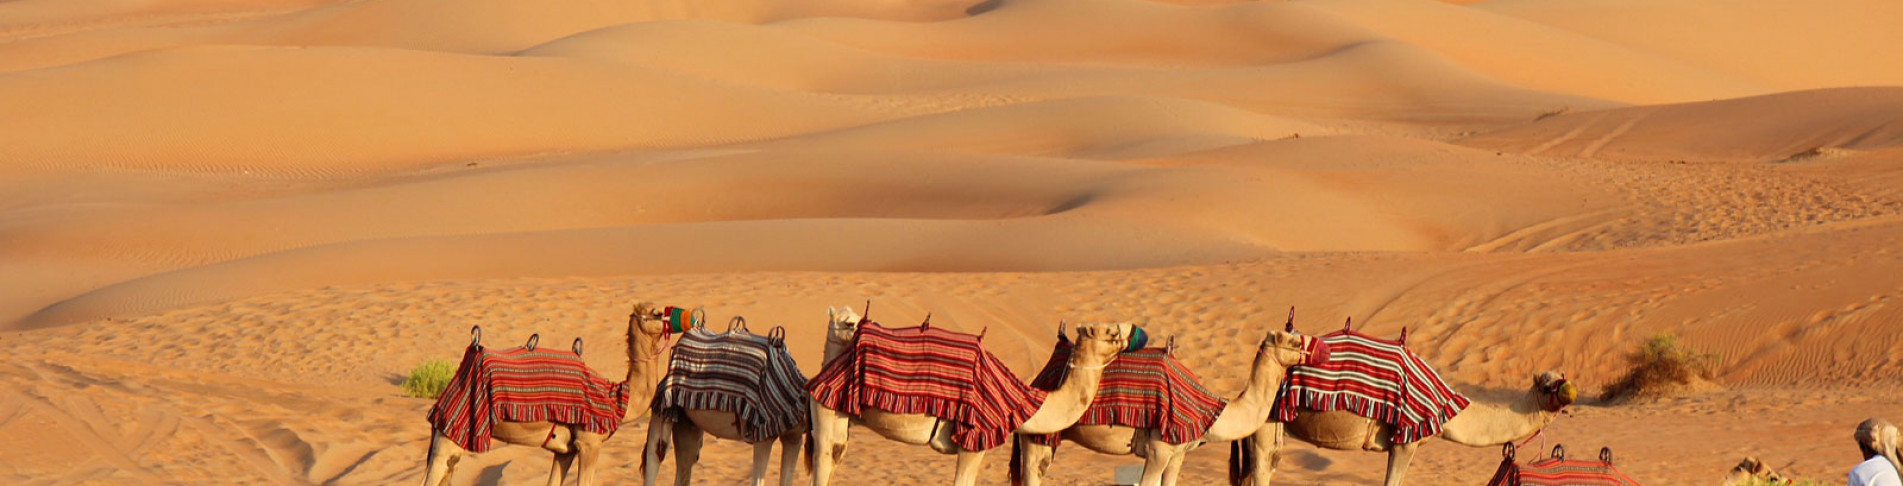 Im last Minute Dubai Urlaub auf Kamelen reiten